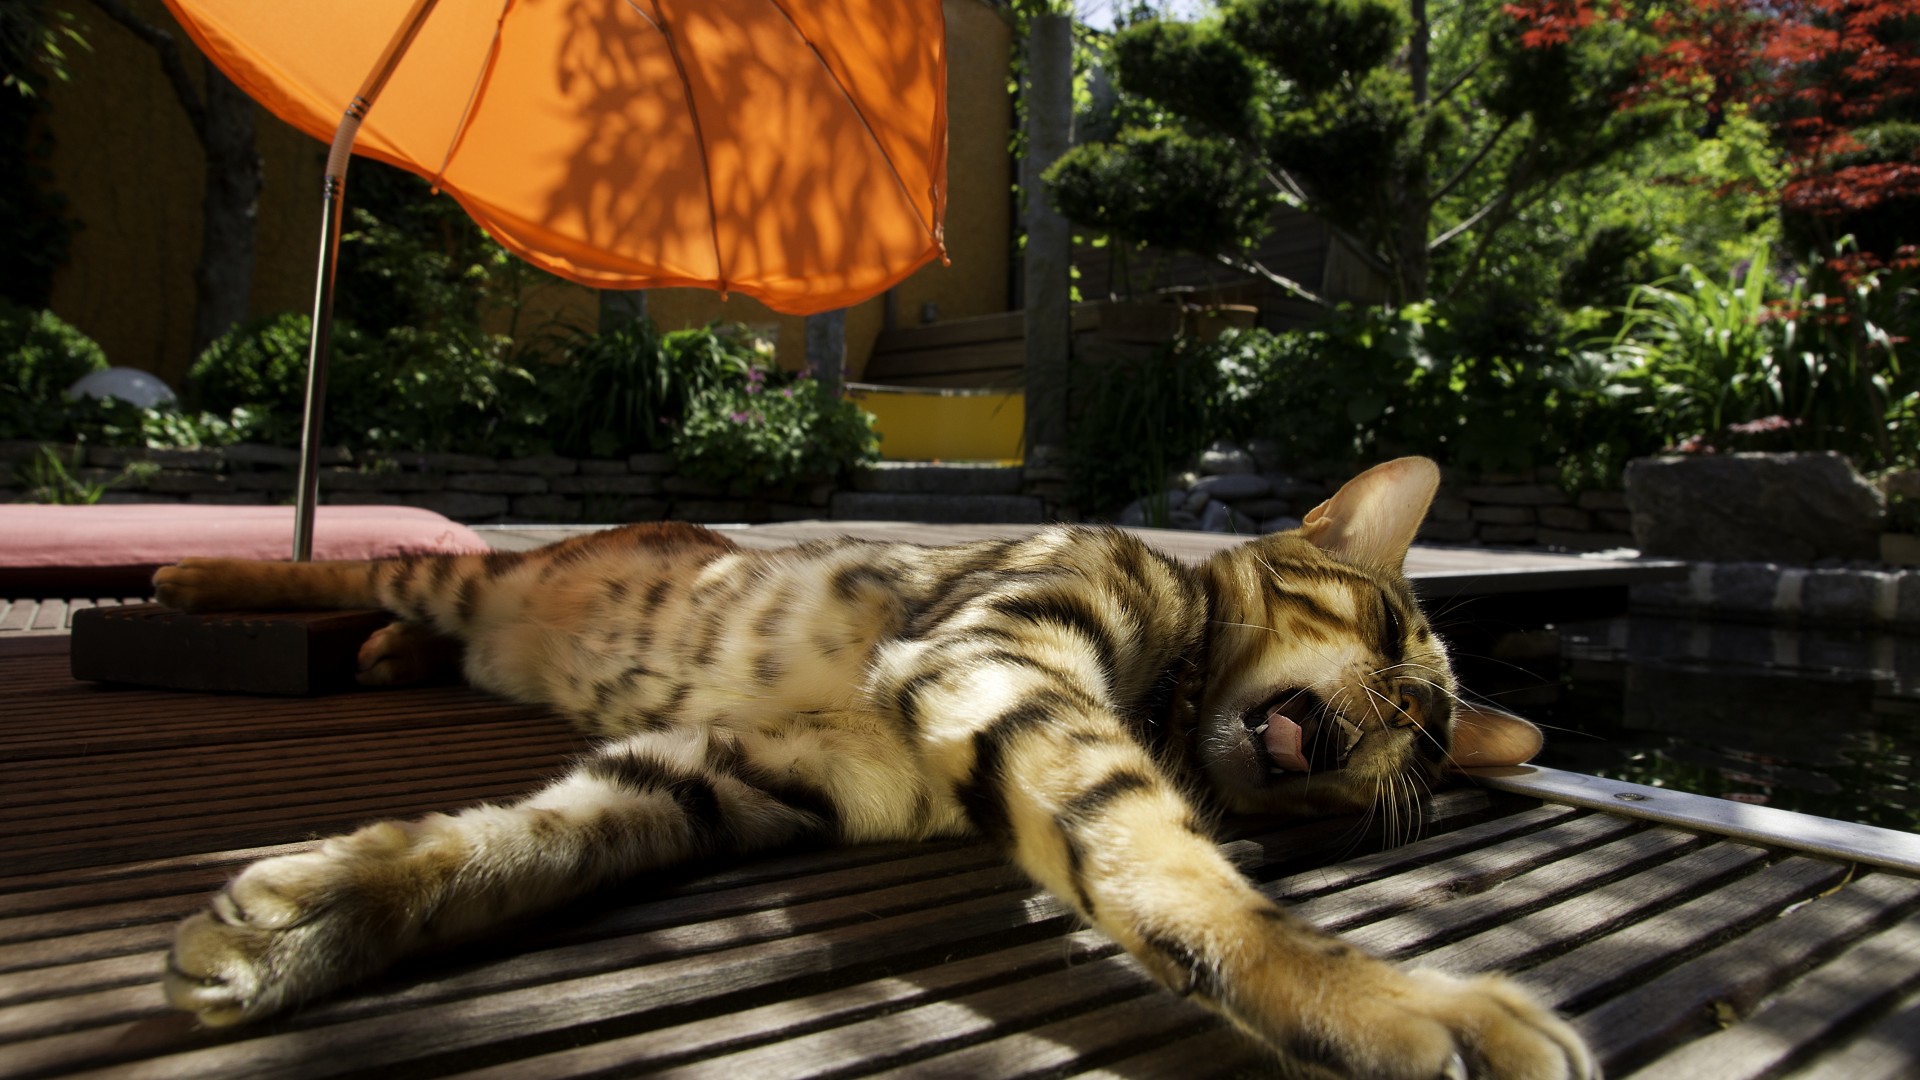 Cat, kitty, kitten, yawns, striped, umbrella, green, relax (horizontal)